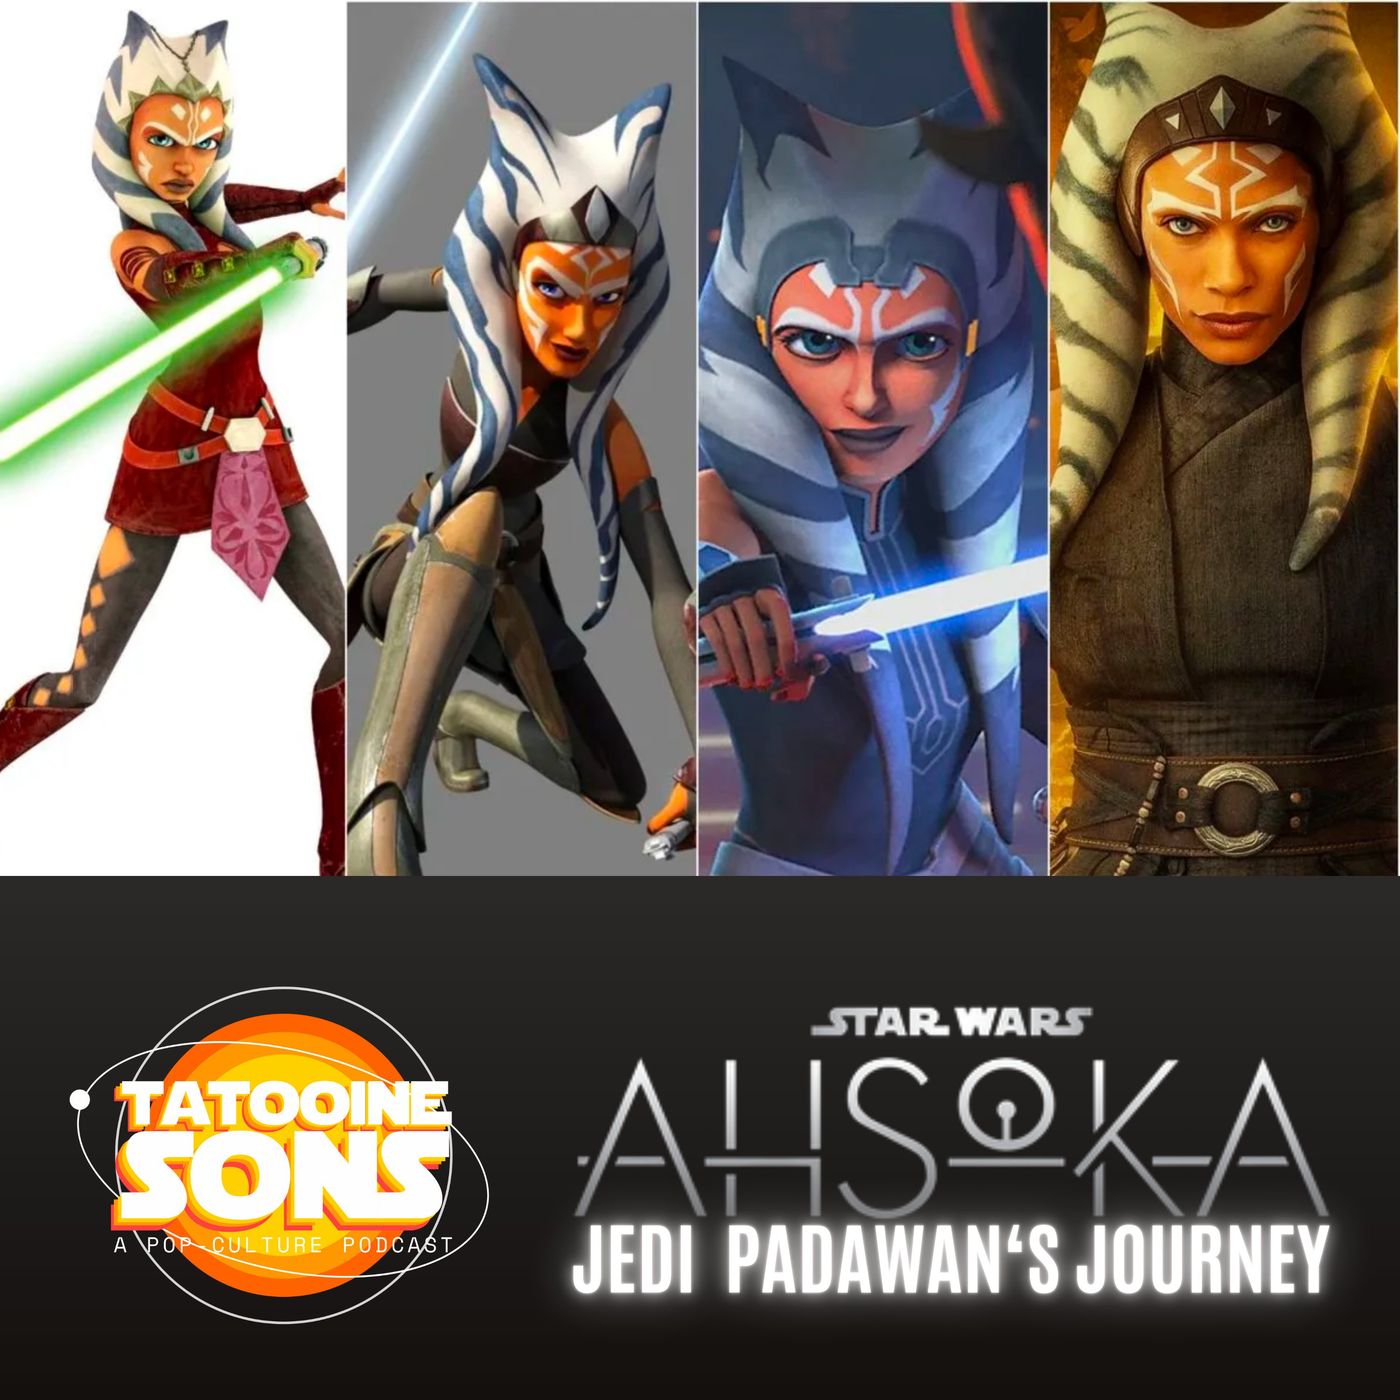 Ahsoka Tano: The Jedi Padawan’s Journey